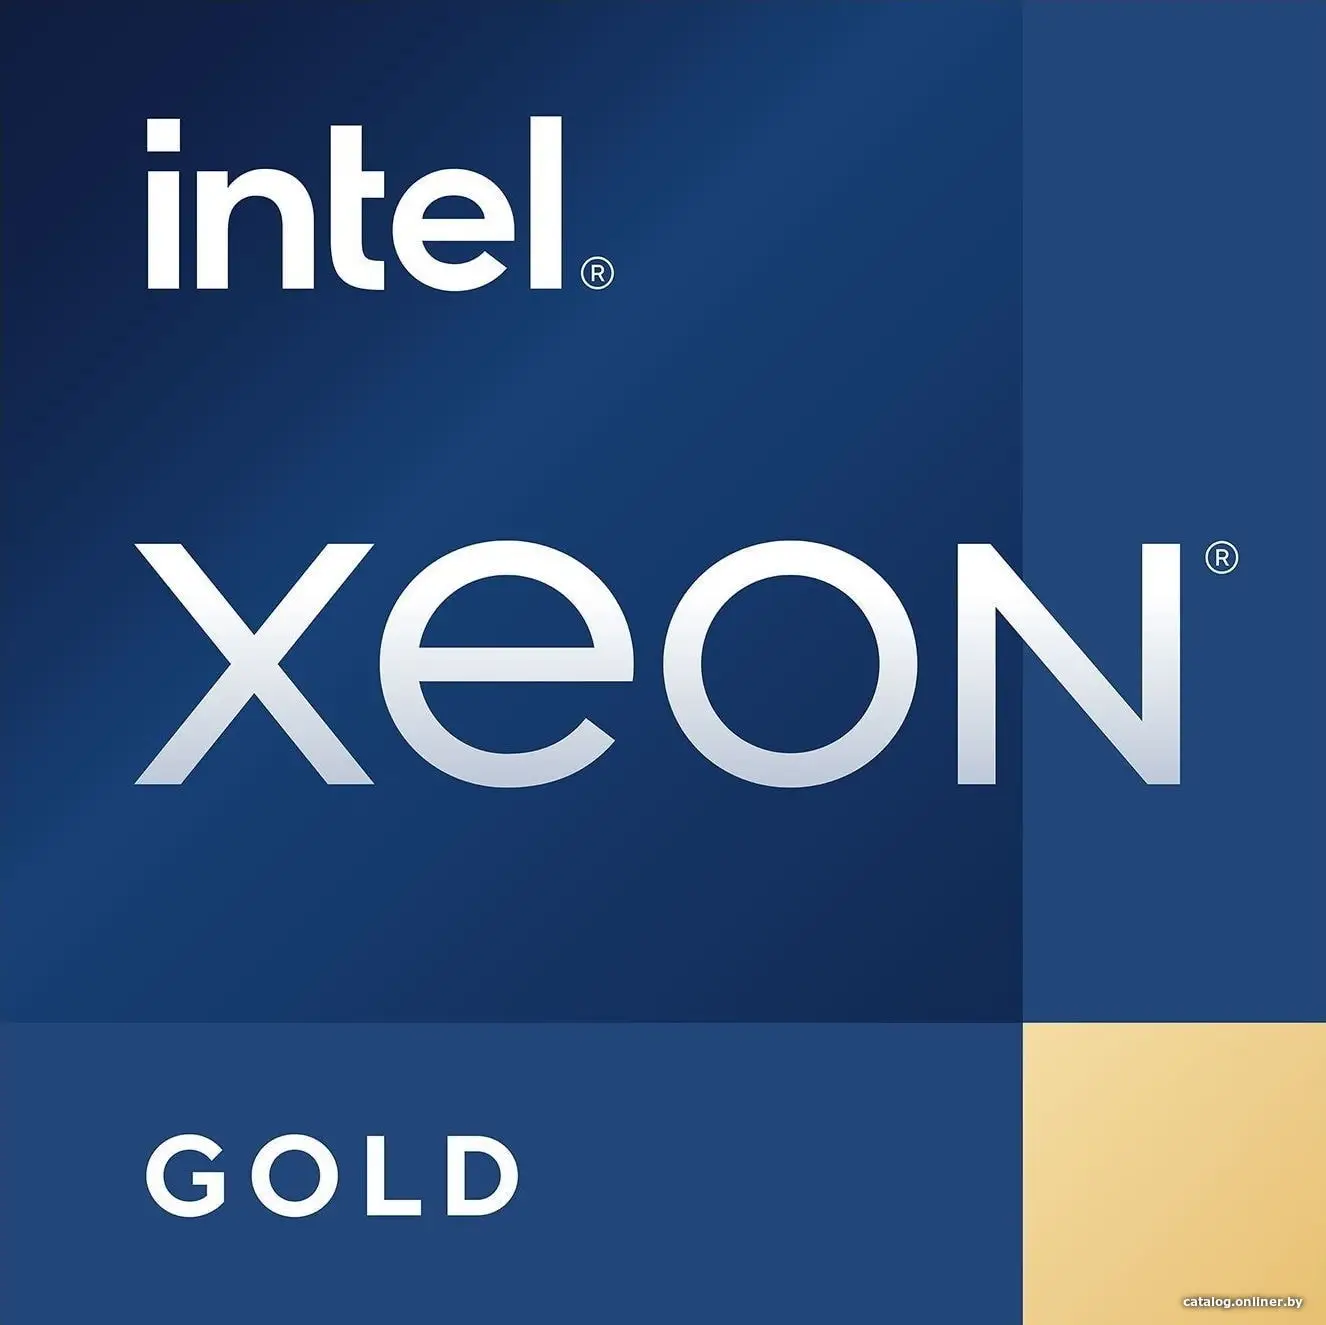 Купить Intel Xeon® Gold 6326 16 Cores, 32 Threads, 2.9/3.5GHz, 24M, DDR4-3200, 2S, 185W (795022), цена, опт и розница